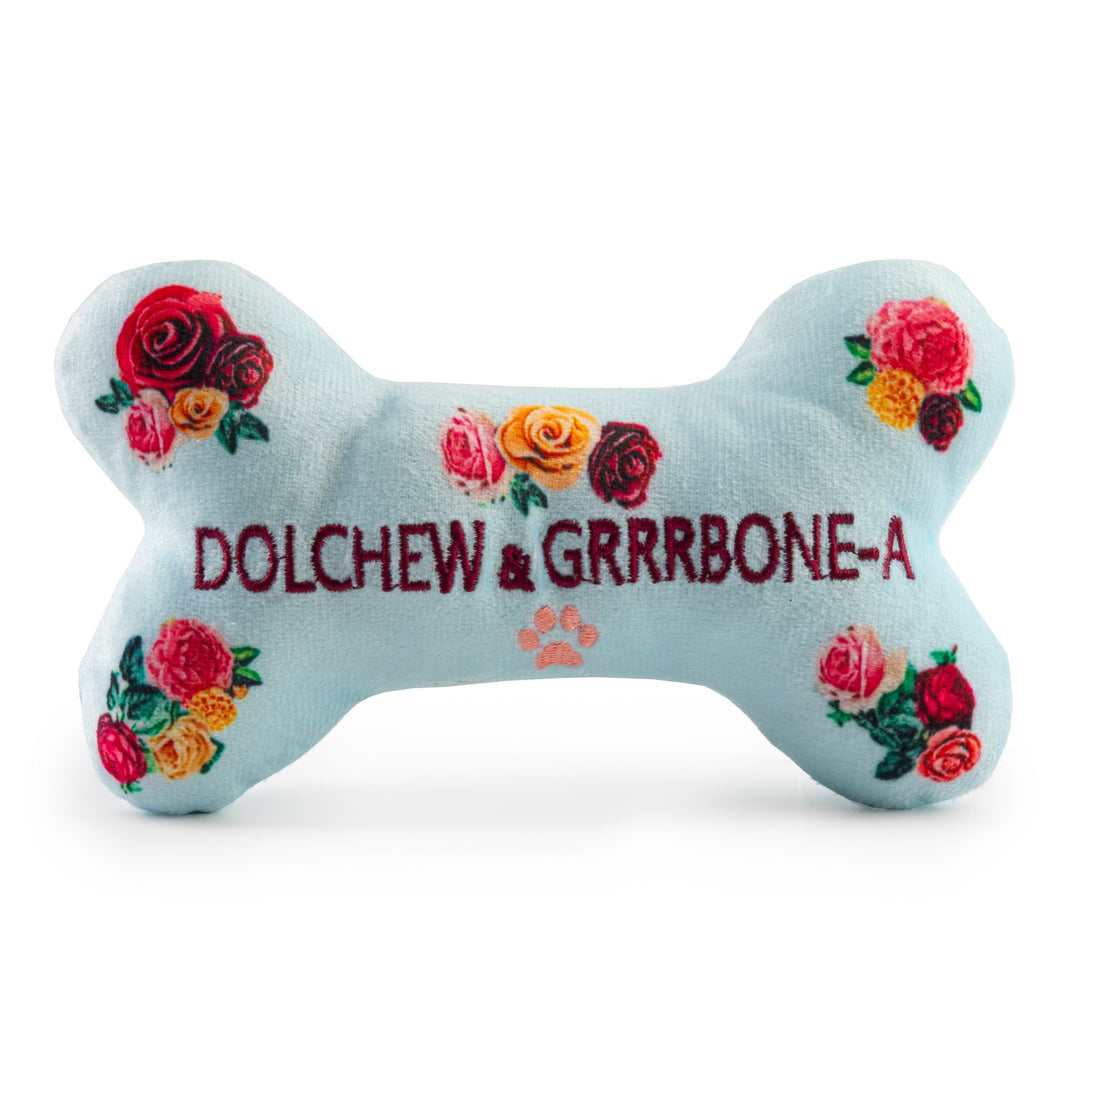 Dolchew &amp; Grrrbone-a Bone